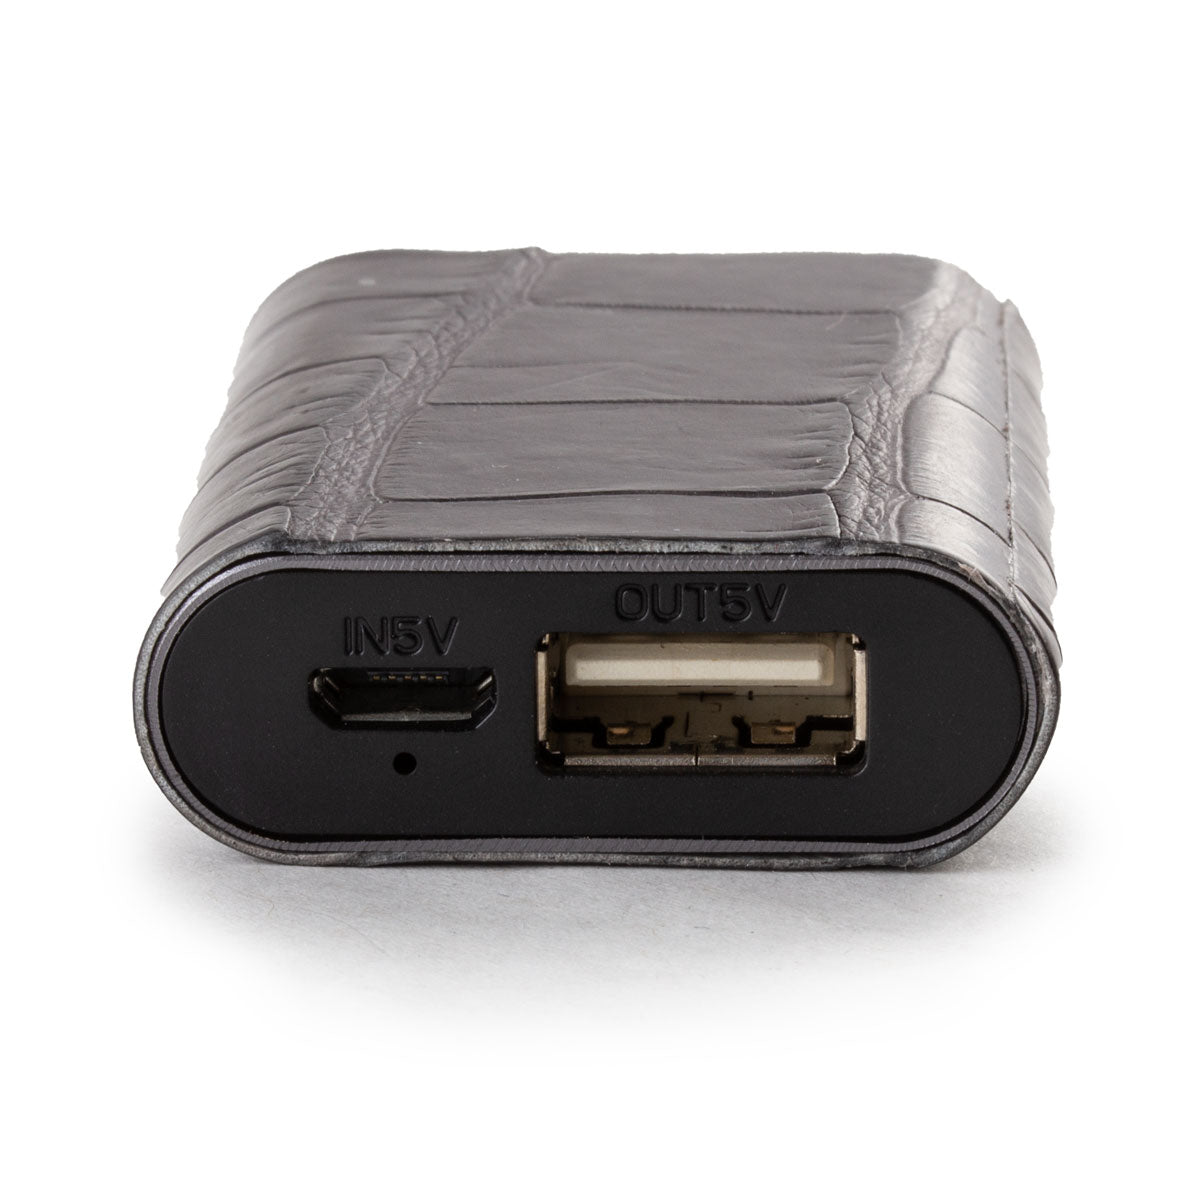 Mini Powerbank / External battery keychain - Alligator - Universal charger iPhone, Samsung, smartphone, tablet ... (black, brown, blue, gray)